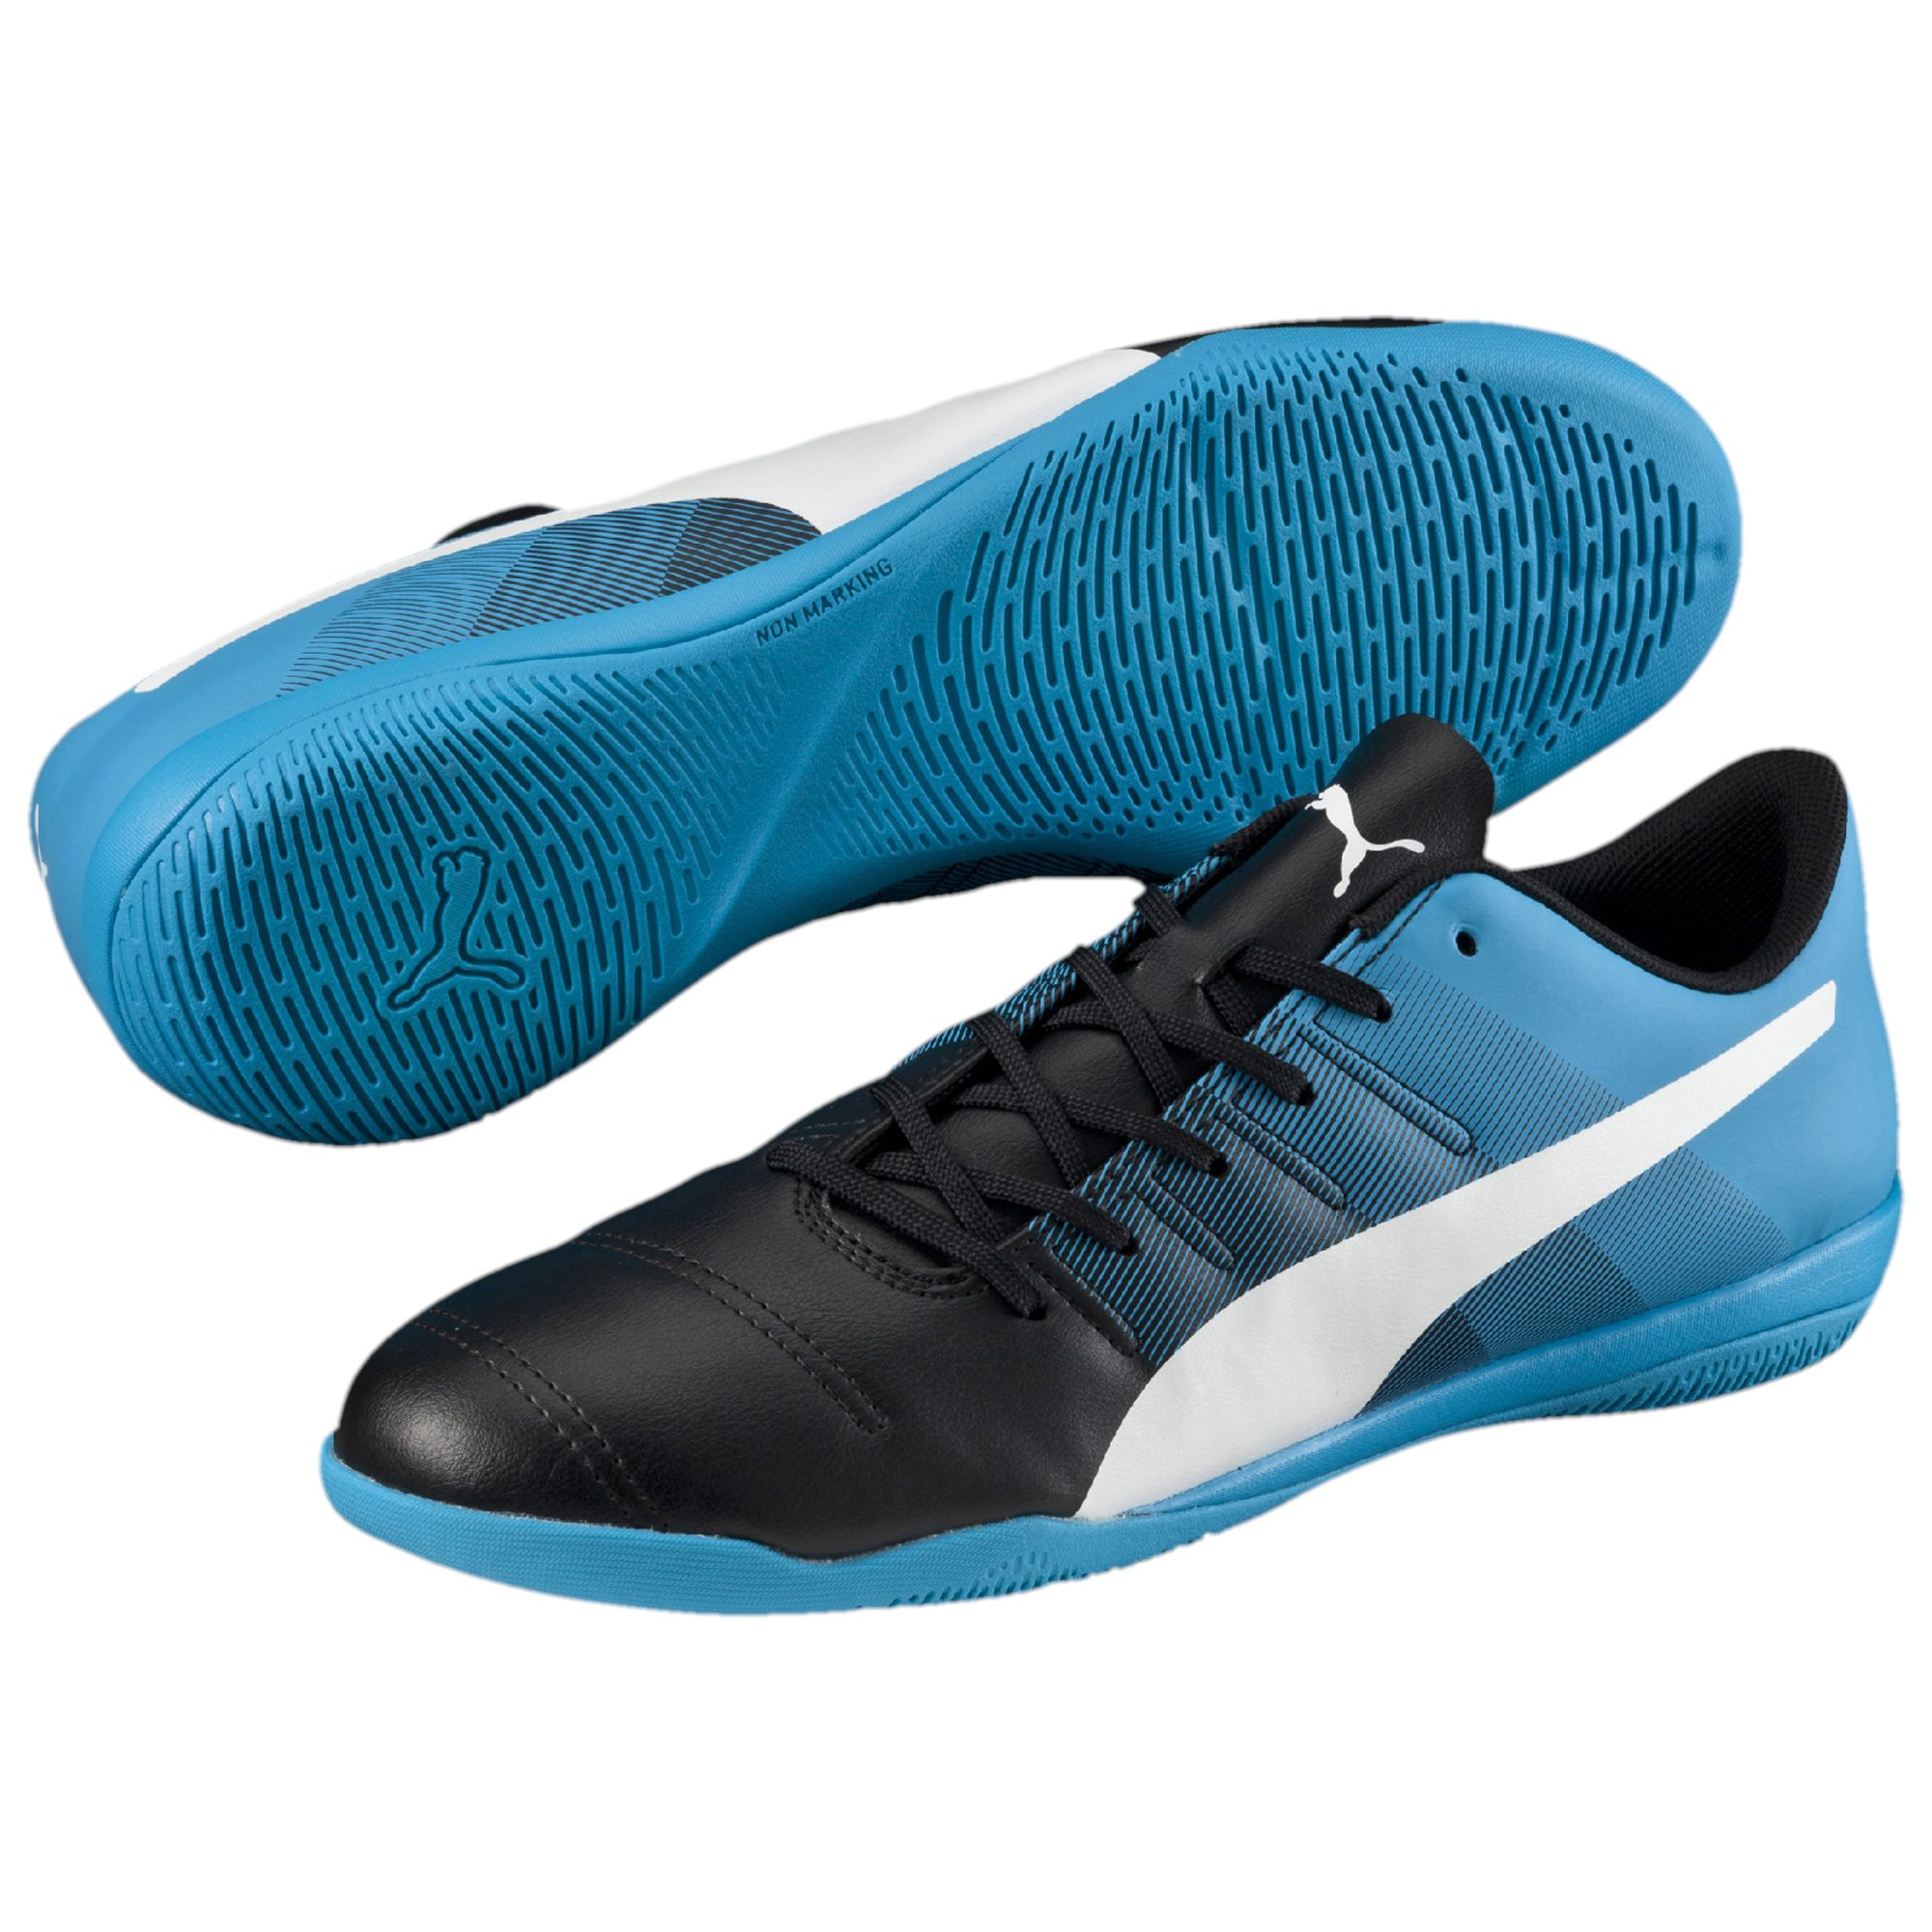 puma evopower indoor soccer shoes